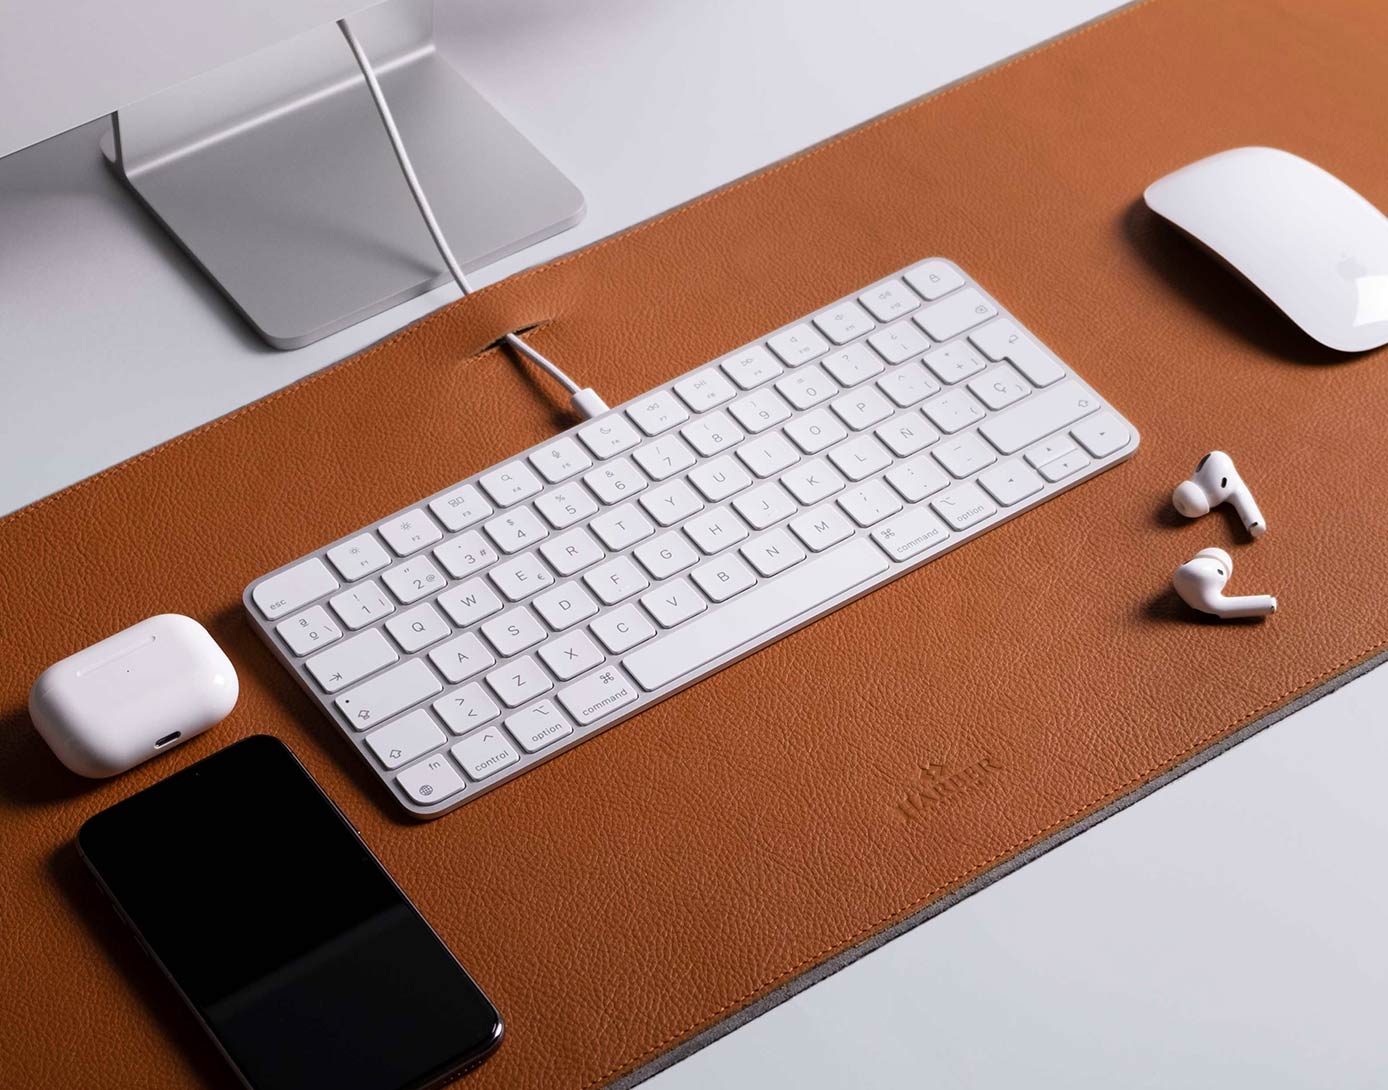 Premium leather desk mat in a minimalist Apple setup